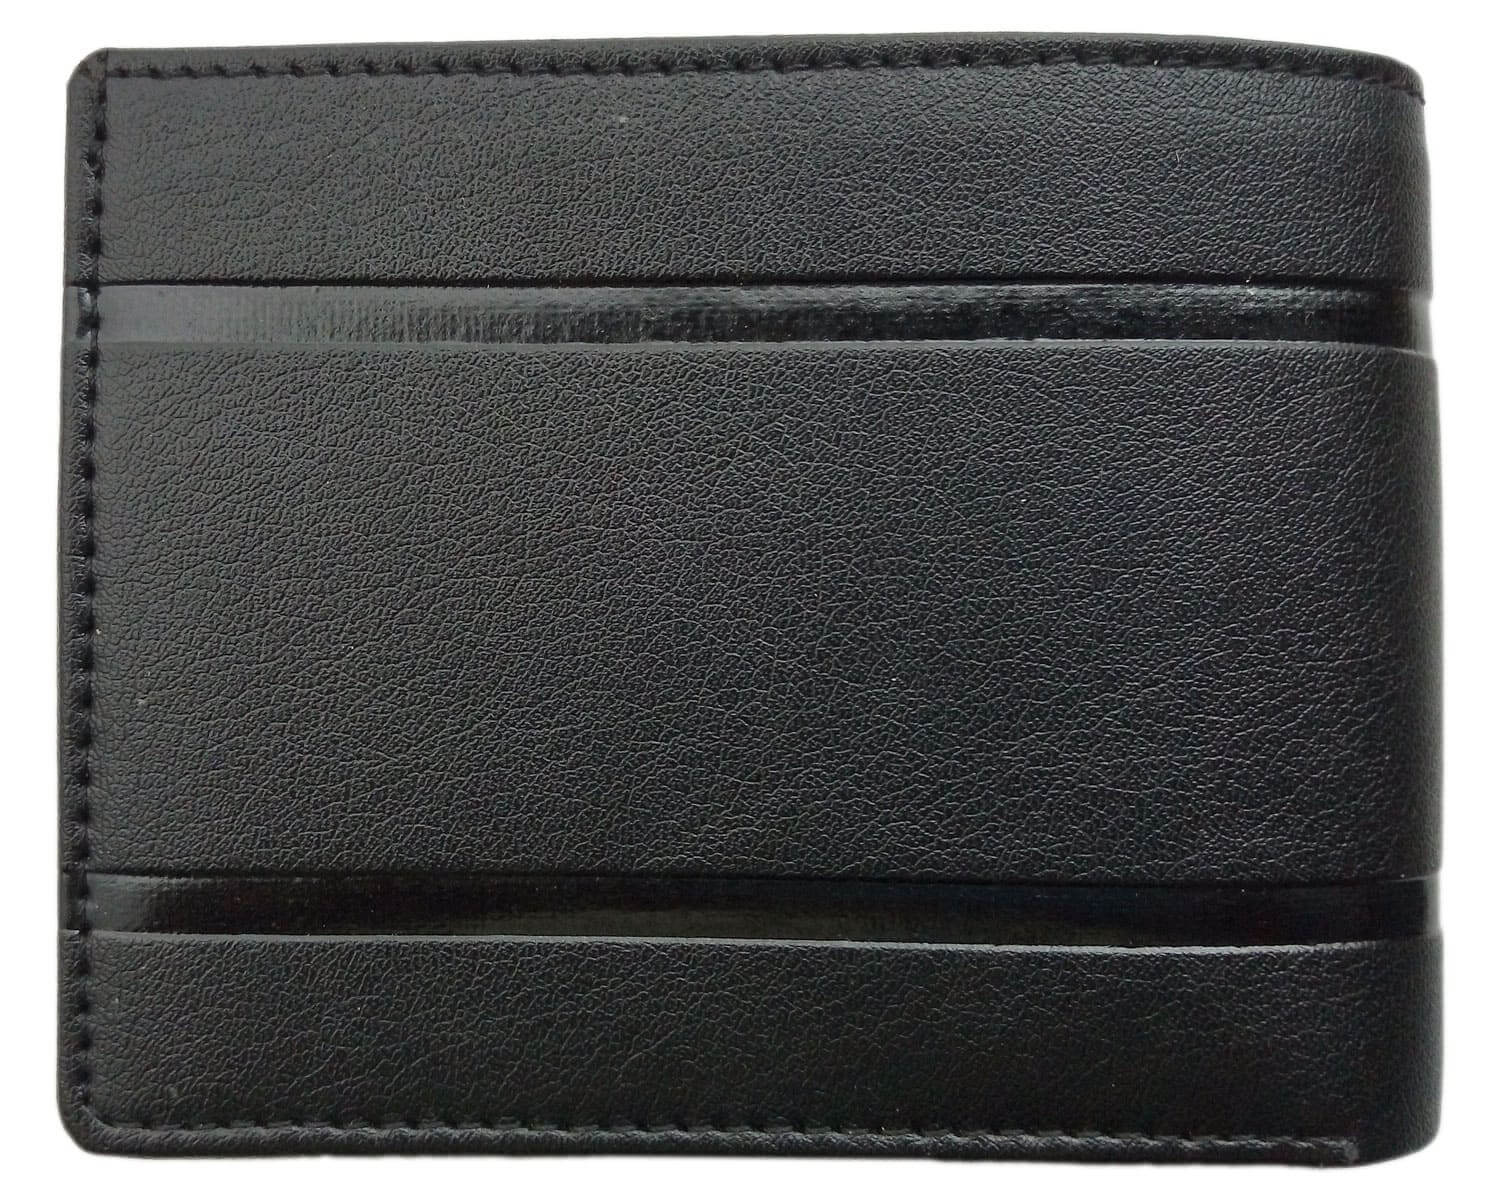 Acne Studios – Men's Small Leather Goods